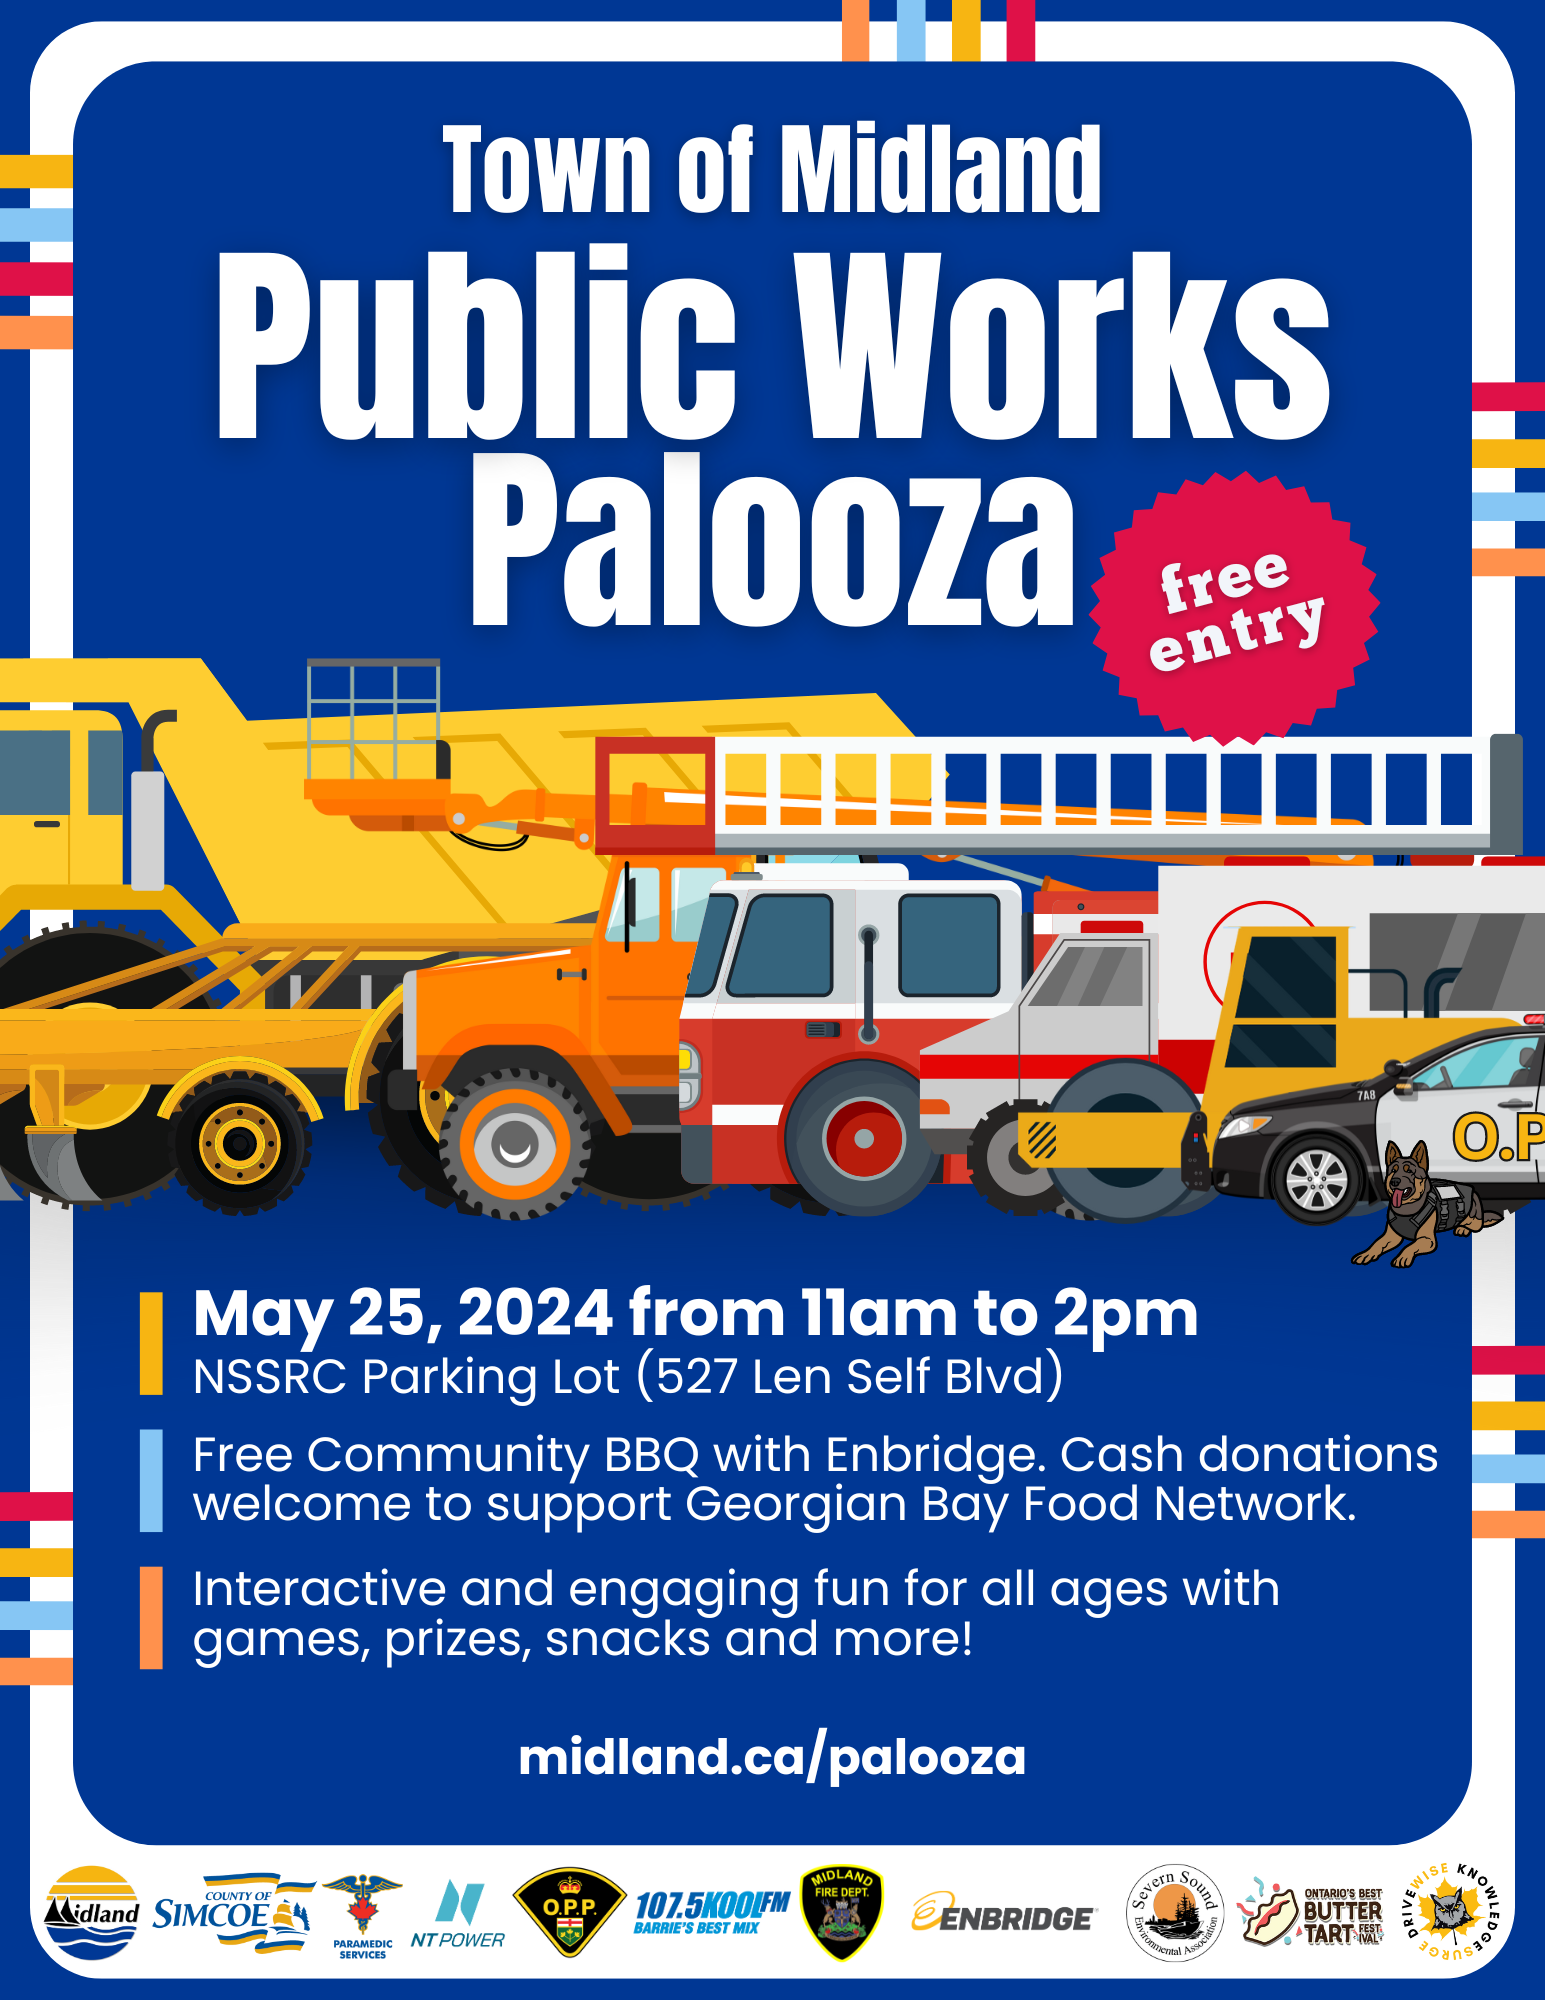 Publics Works Palooza Poster